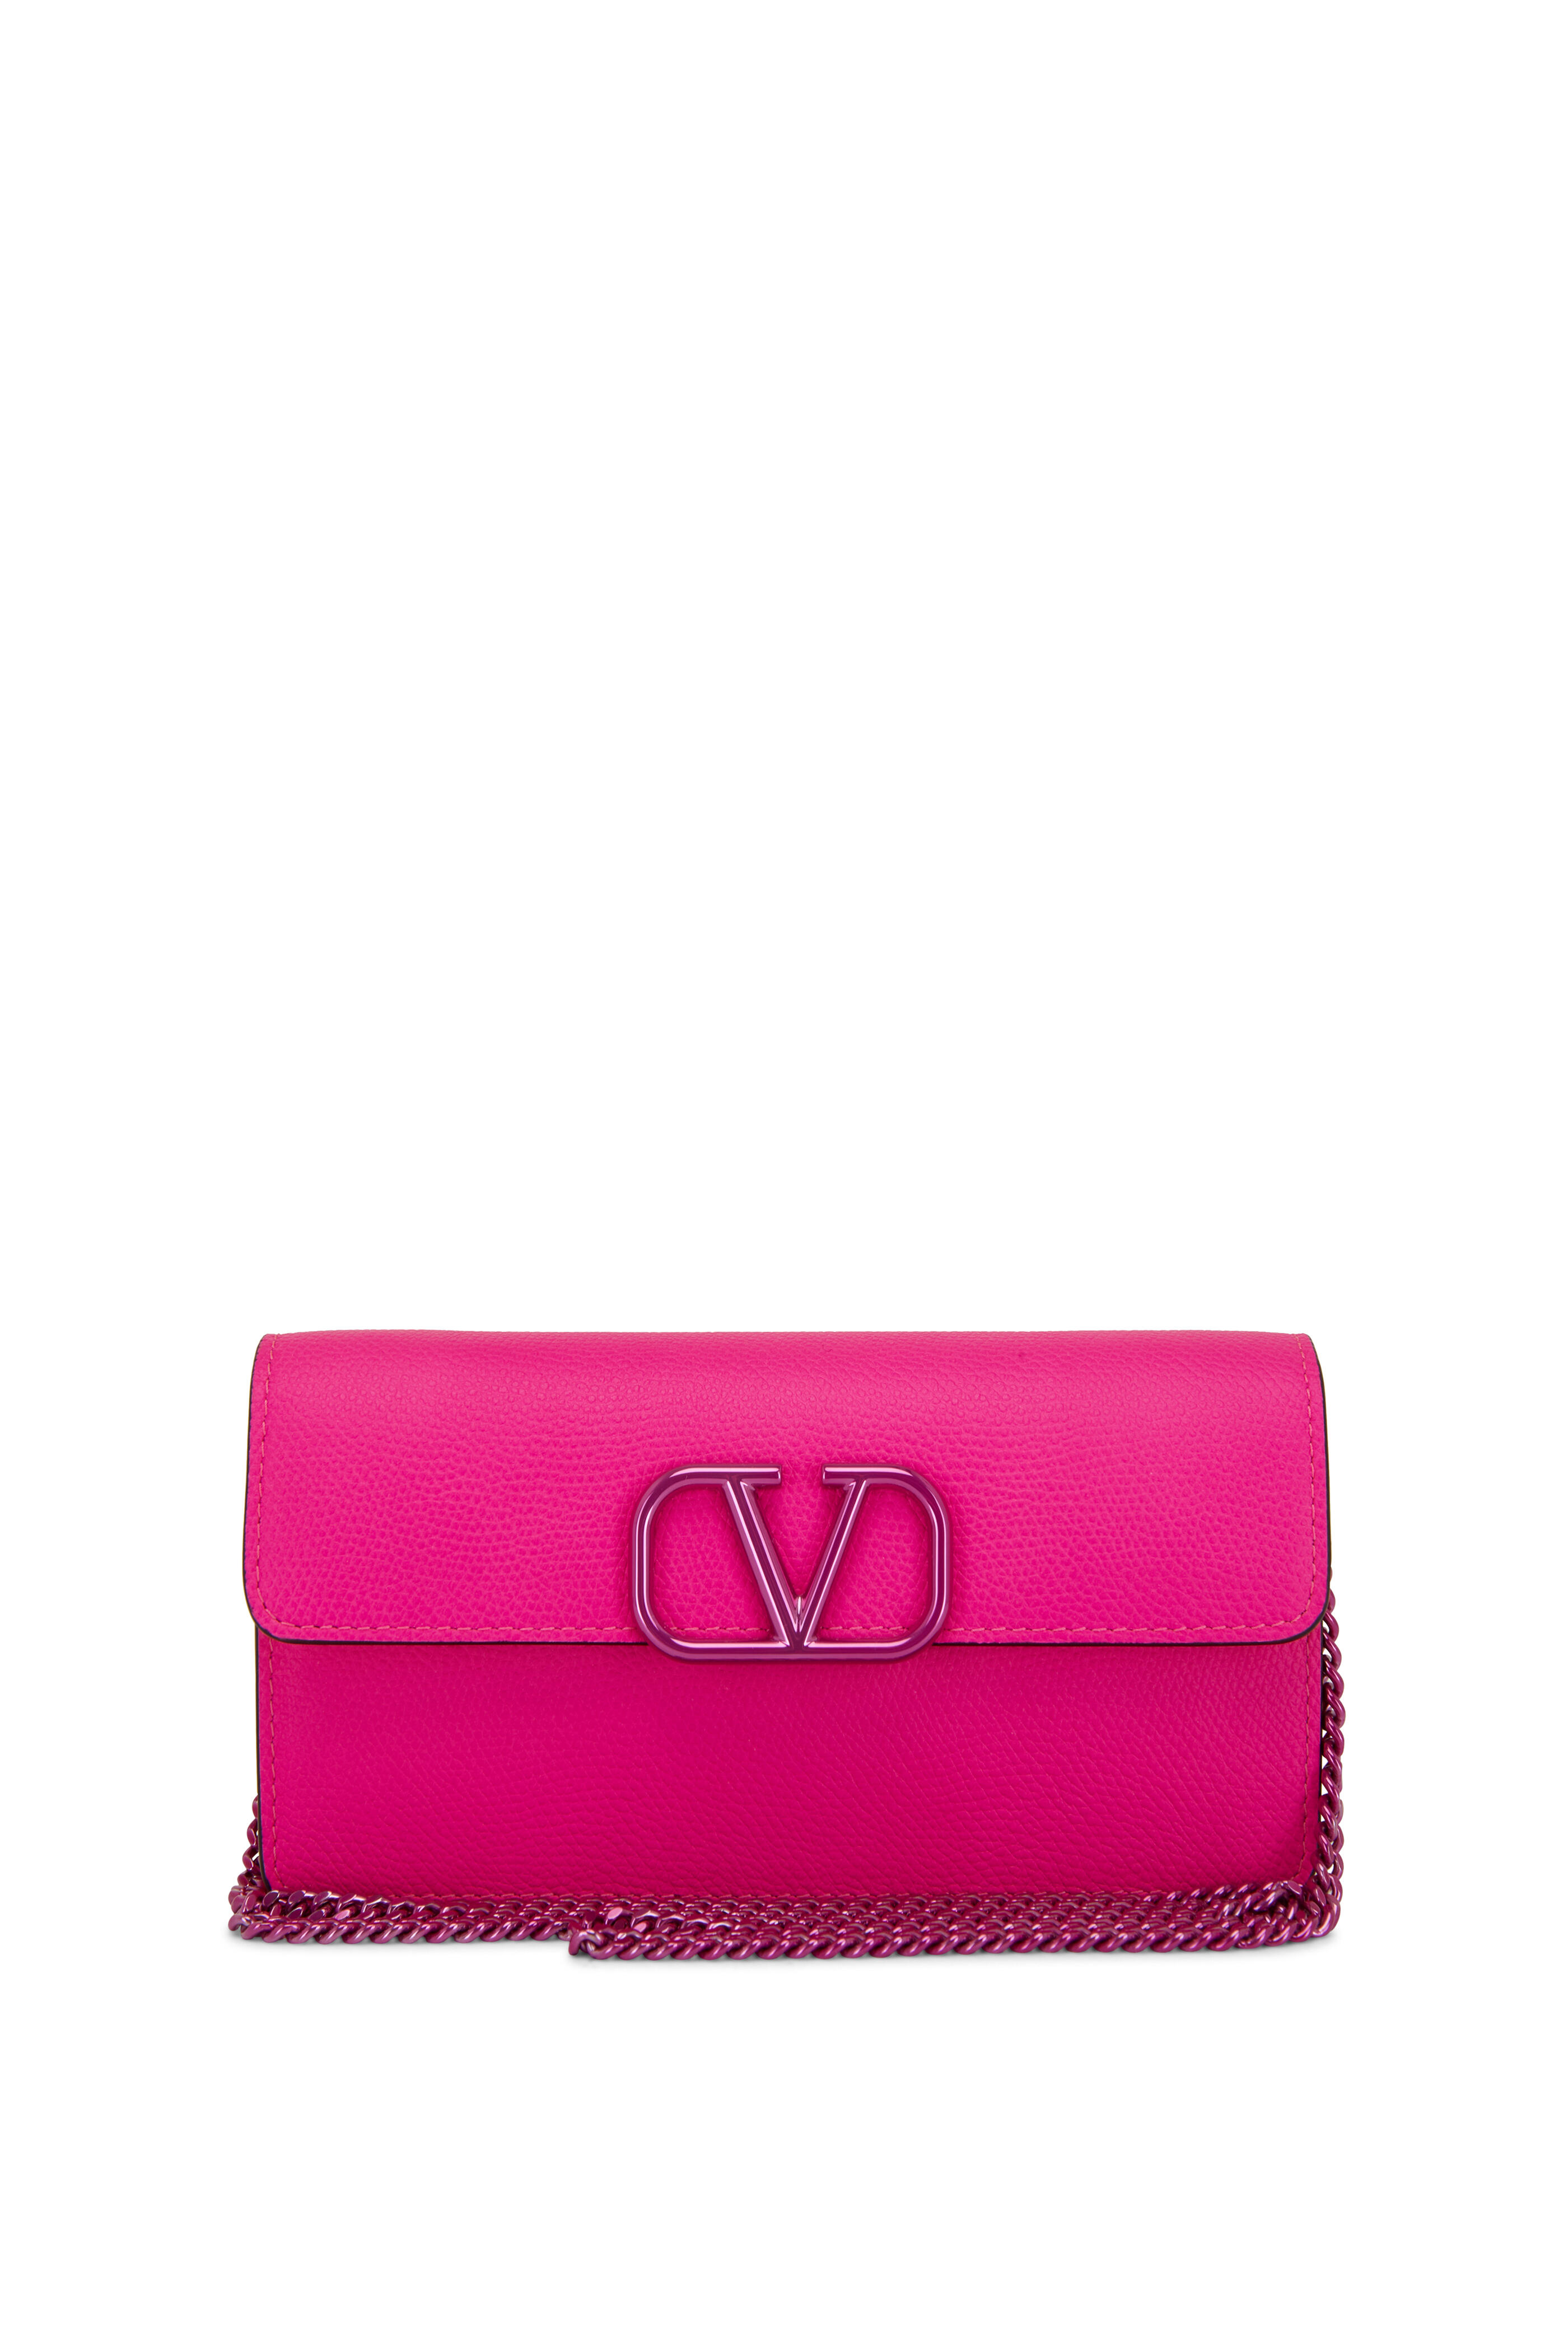 Valentino Garavani - Signature Hot Pink Chain Wallet